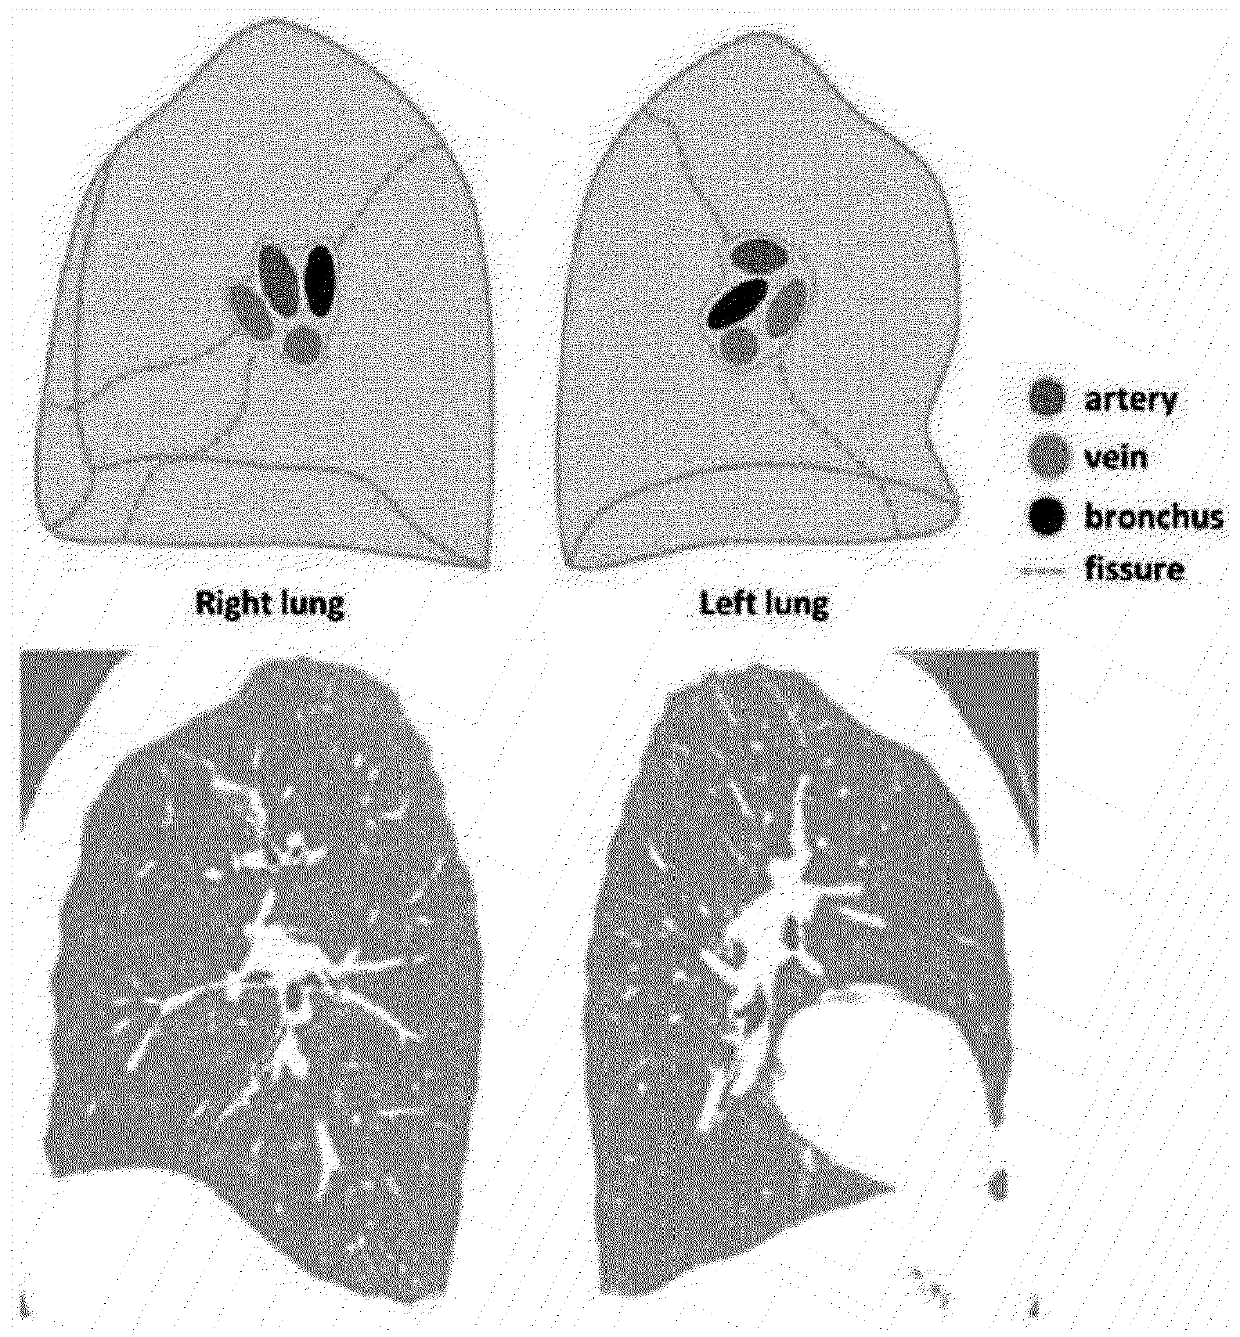 Method for distinguishing pulmonary artery and pulmonary vein, and method for quantifying blood vessels using same